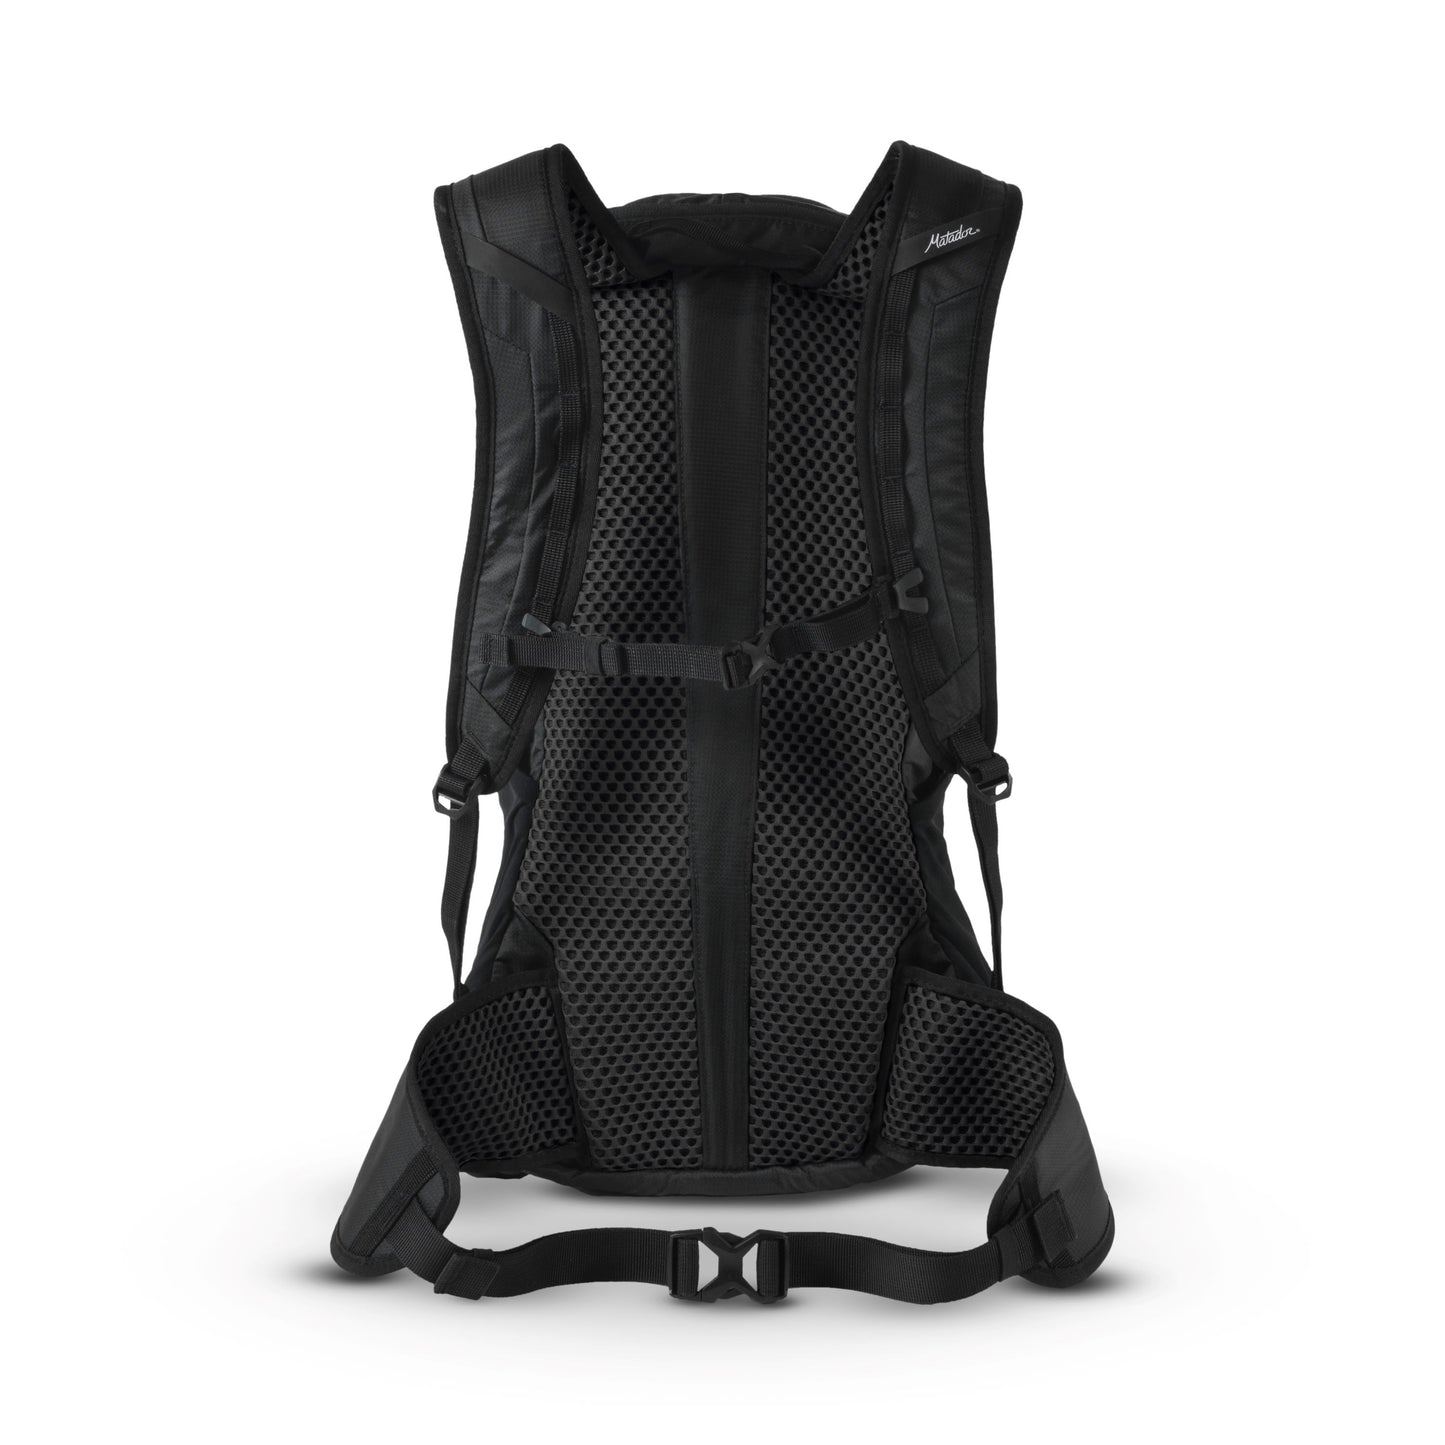 Matador - Beast18 2.0 Ultralight Technical Backpack - Charcoal